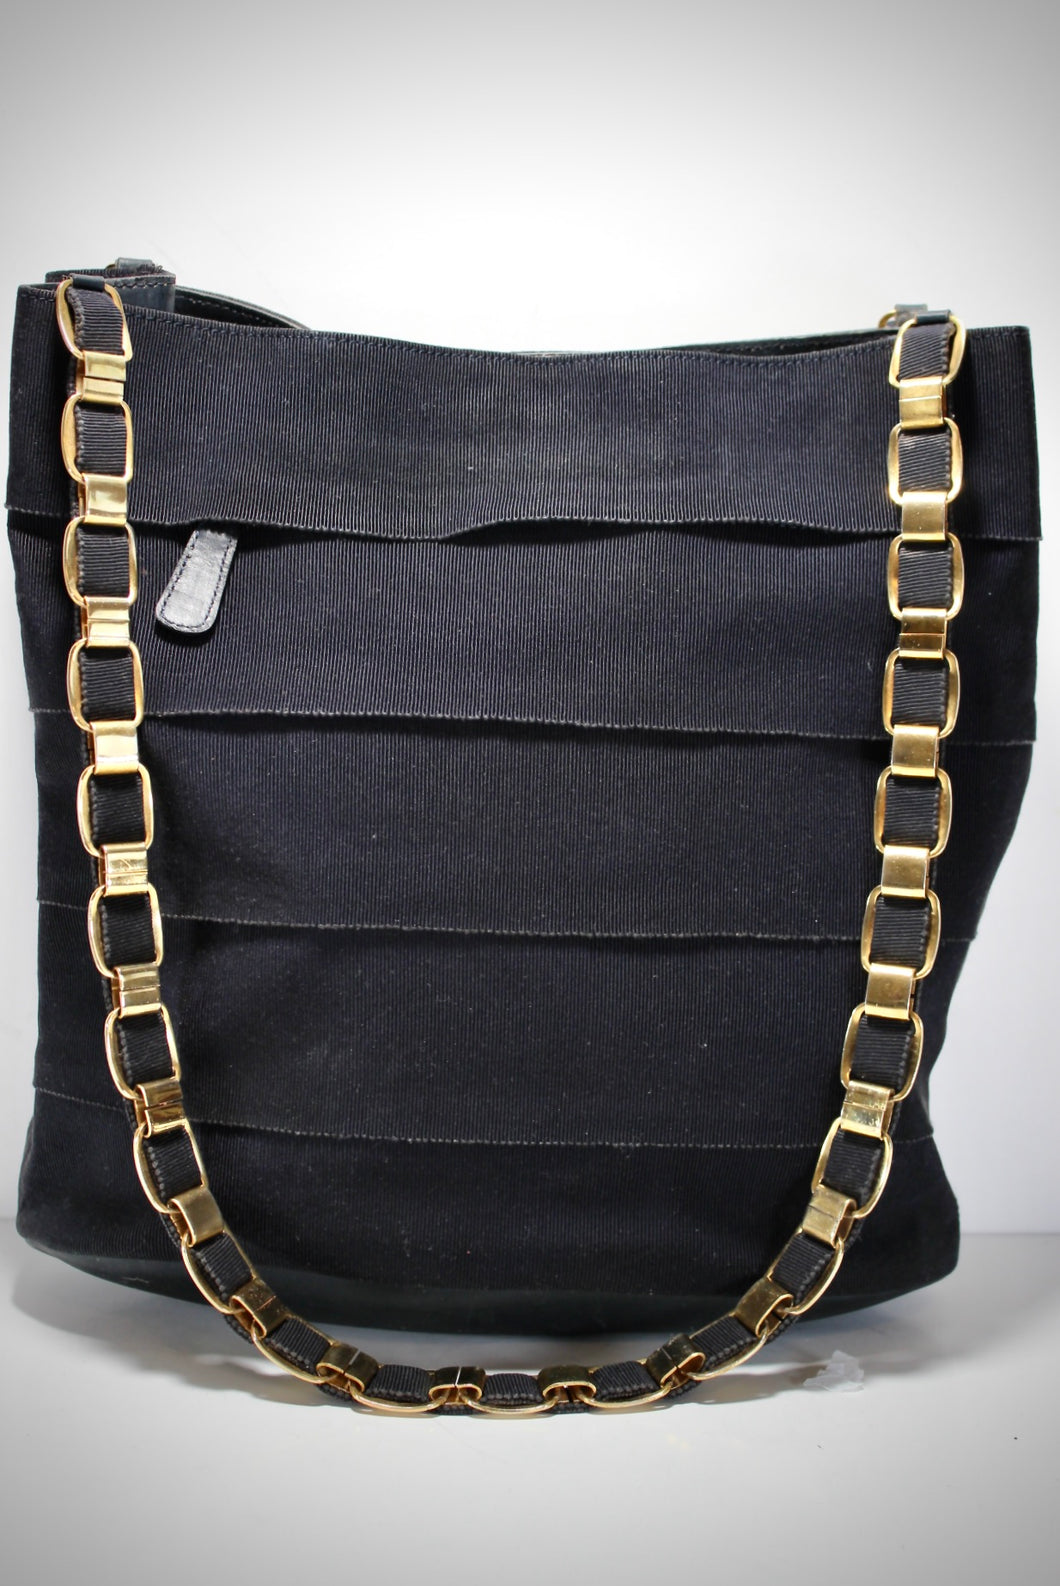 Vintage SALVATORE FERRAGAMO Black Fabric Layered Tote Shoulder Bag Gold Chain Link Straps